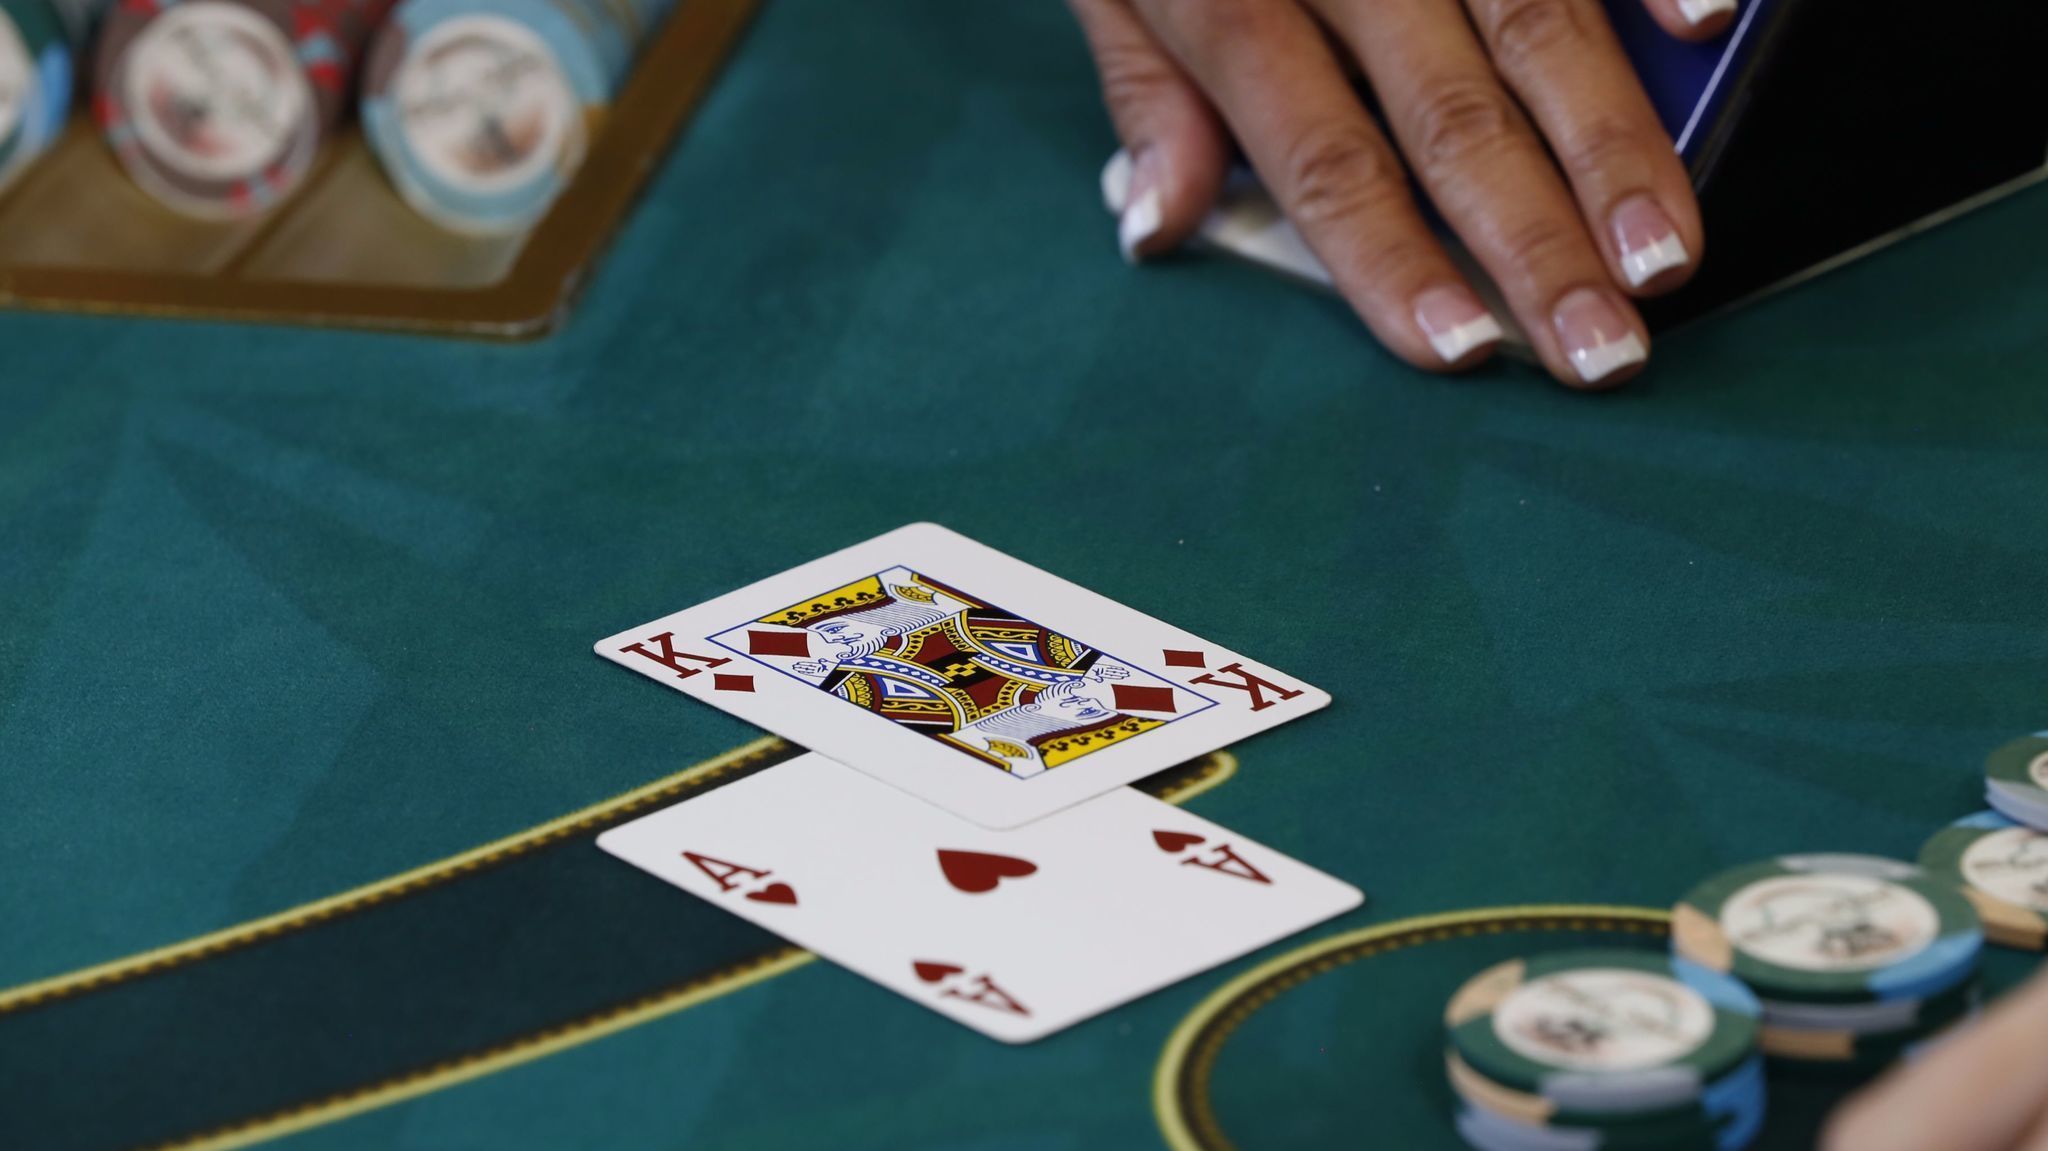 Man hits $1 million jackpot on Super 4 Progressive Blackjack wager